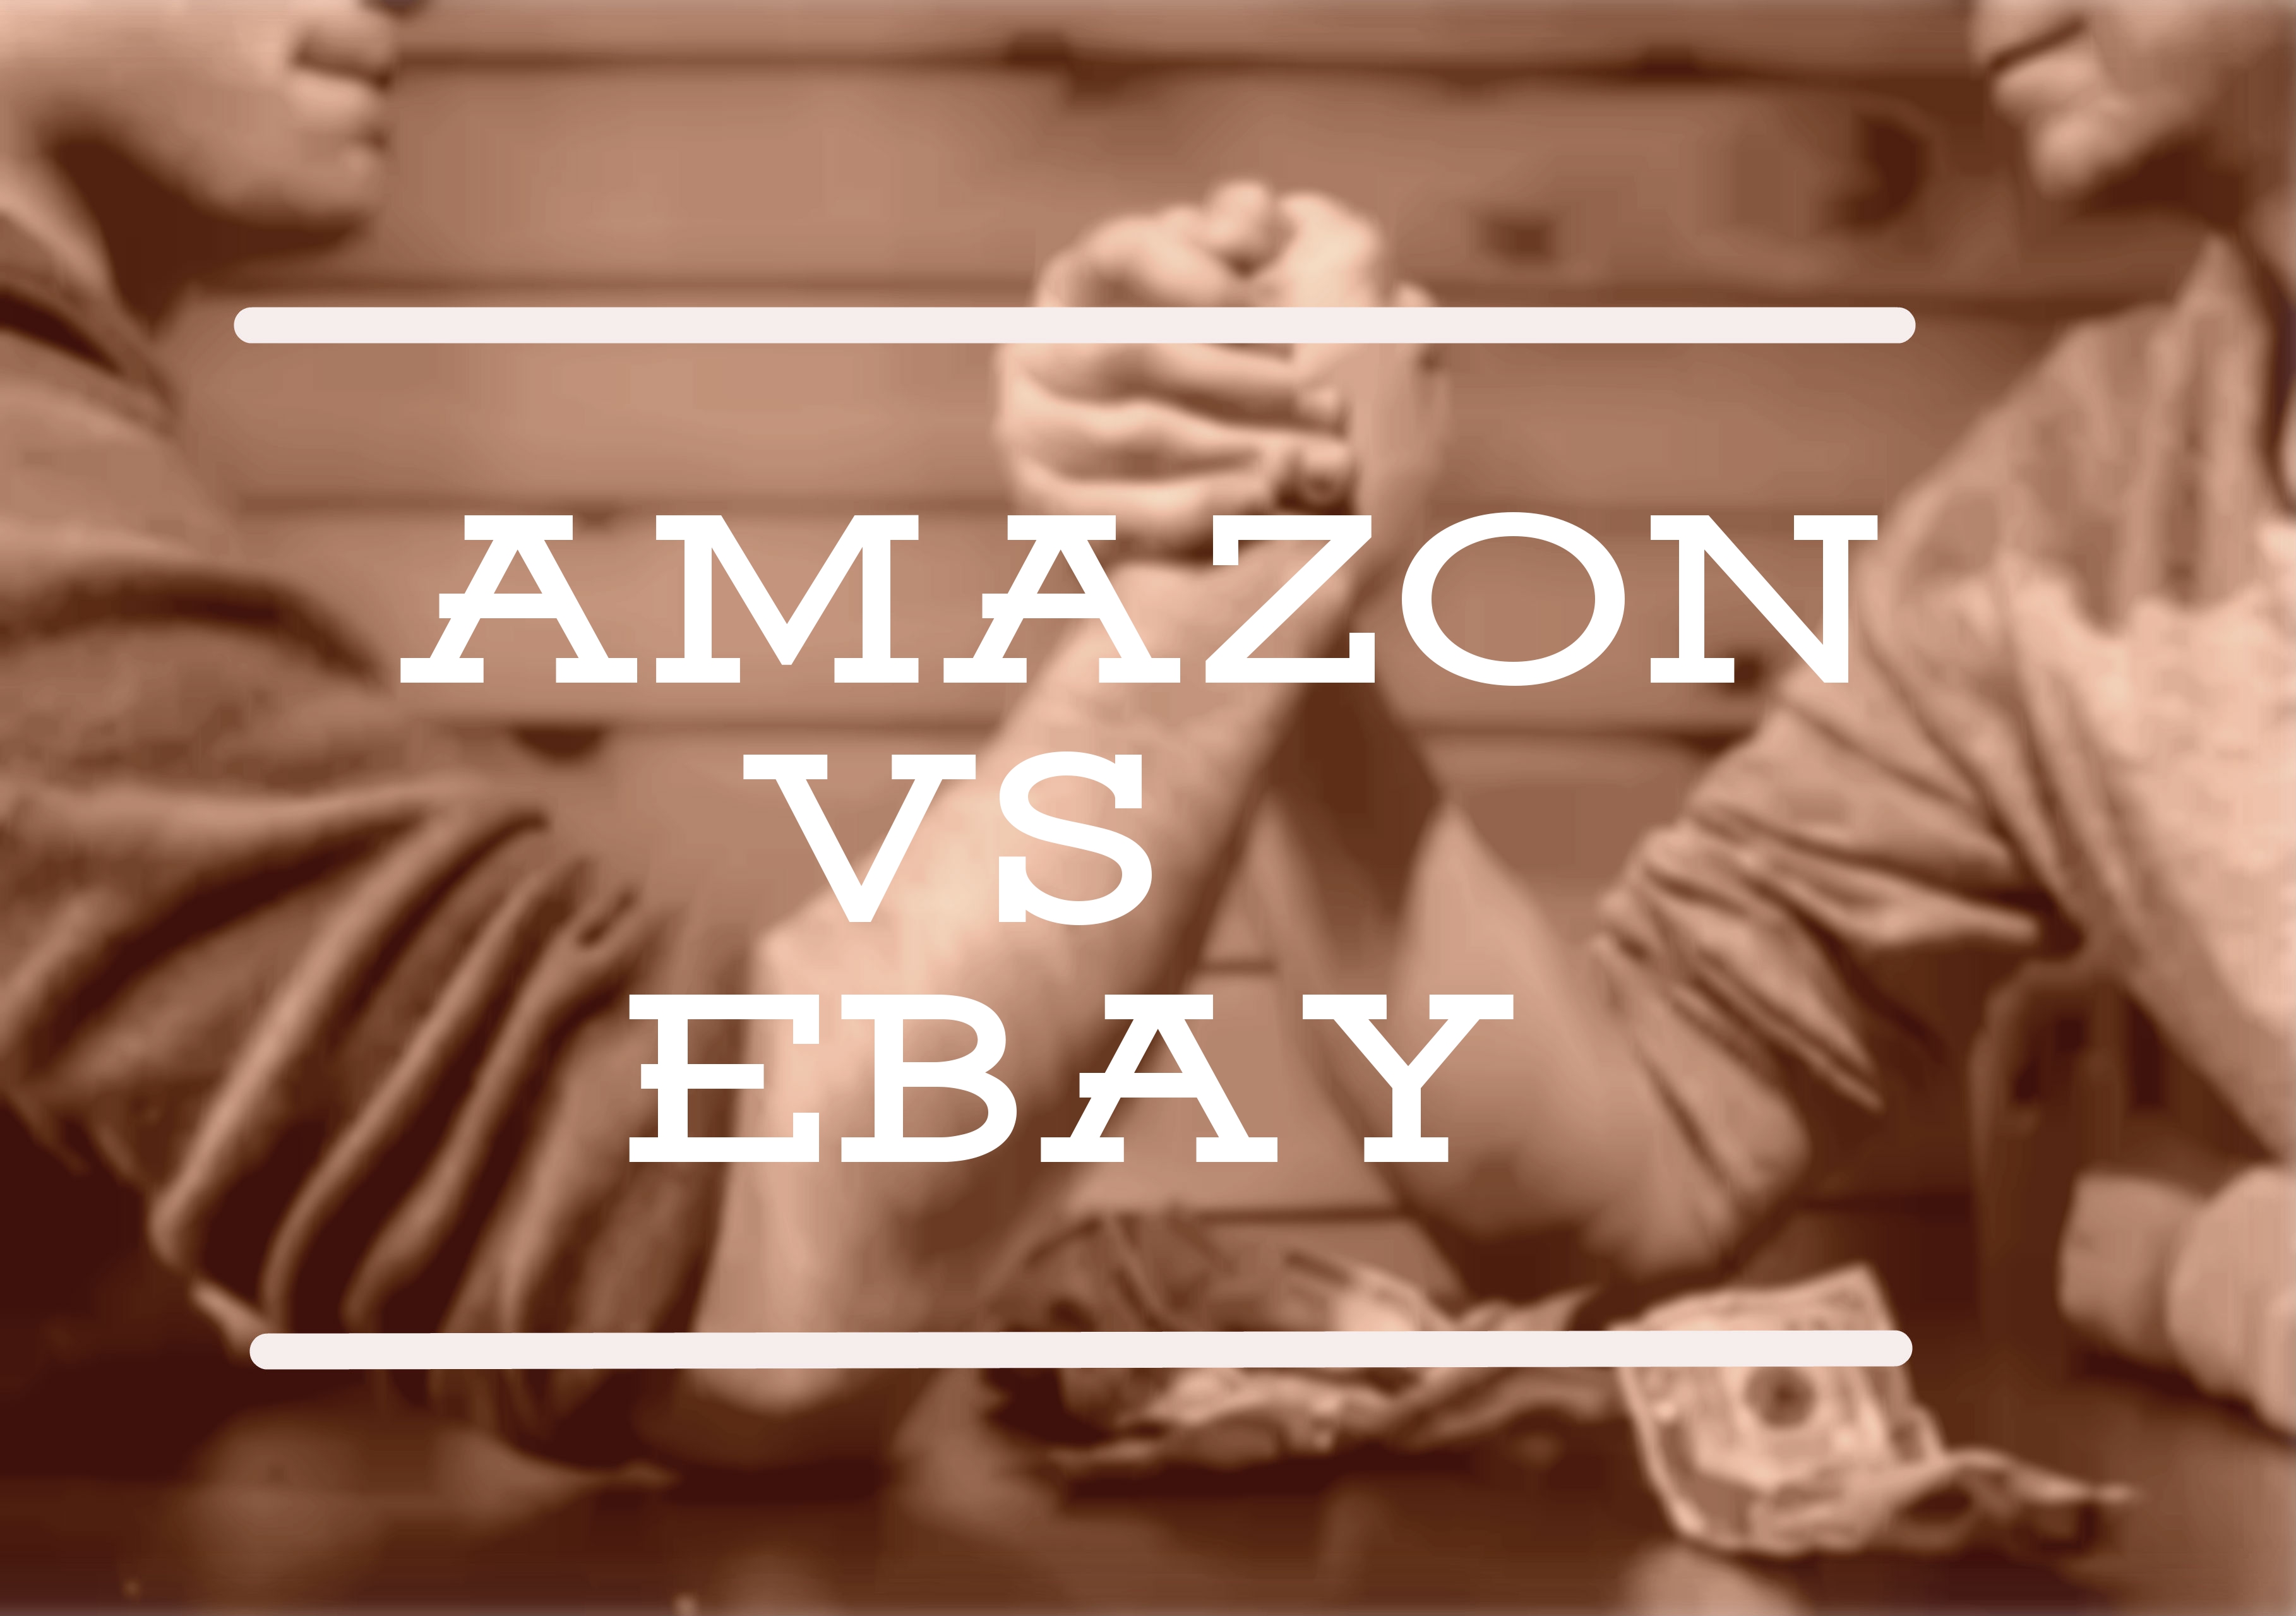 Amazon vs eBay